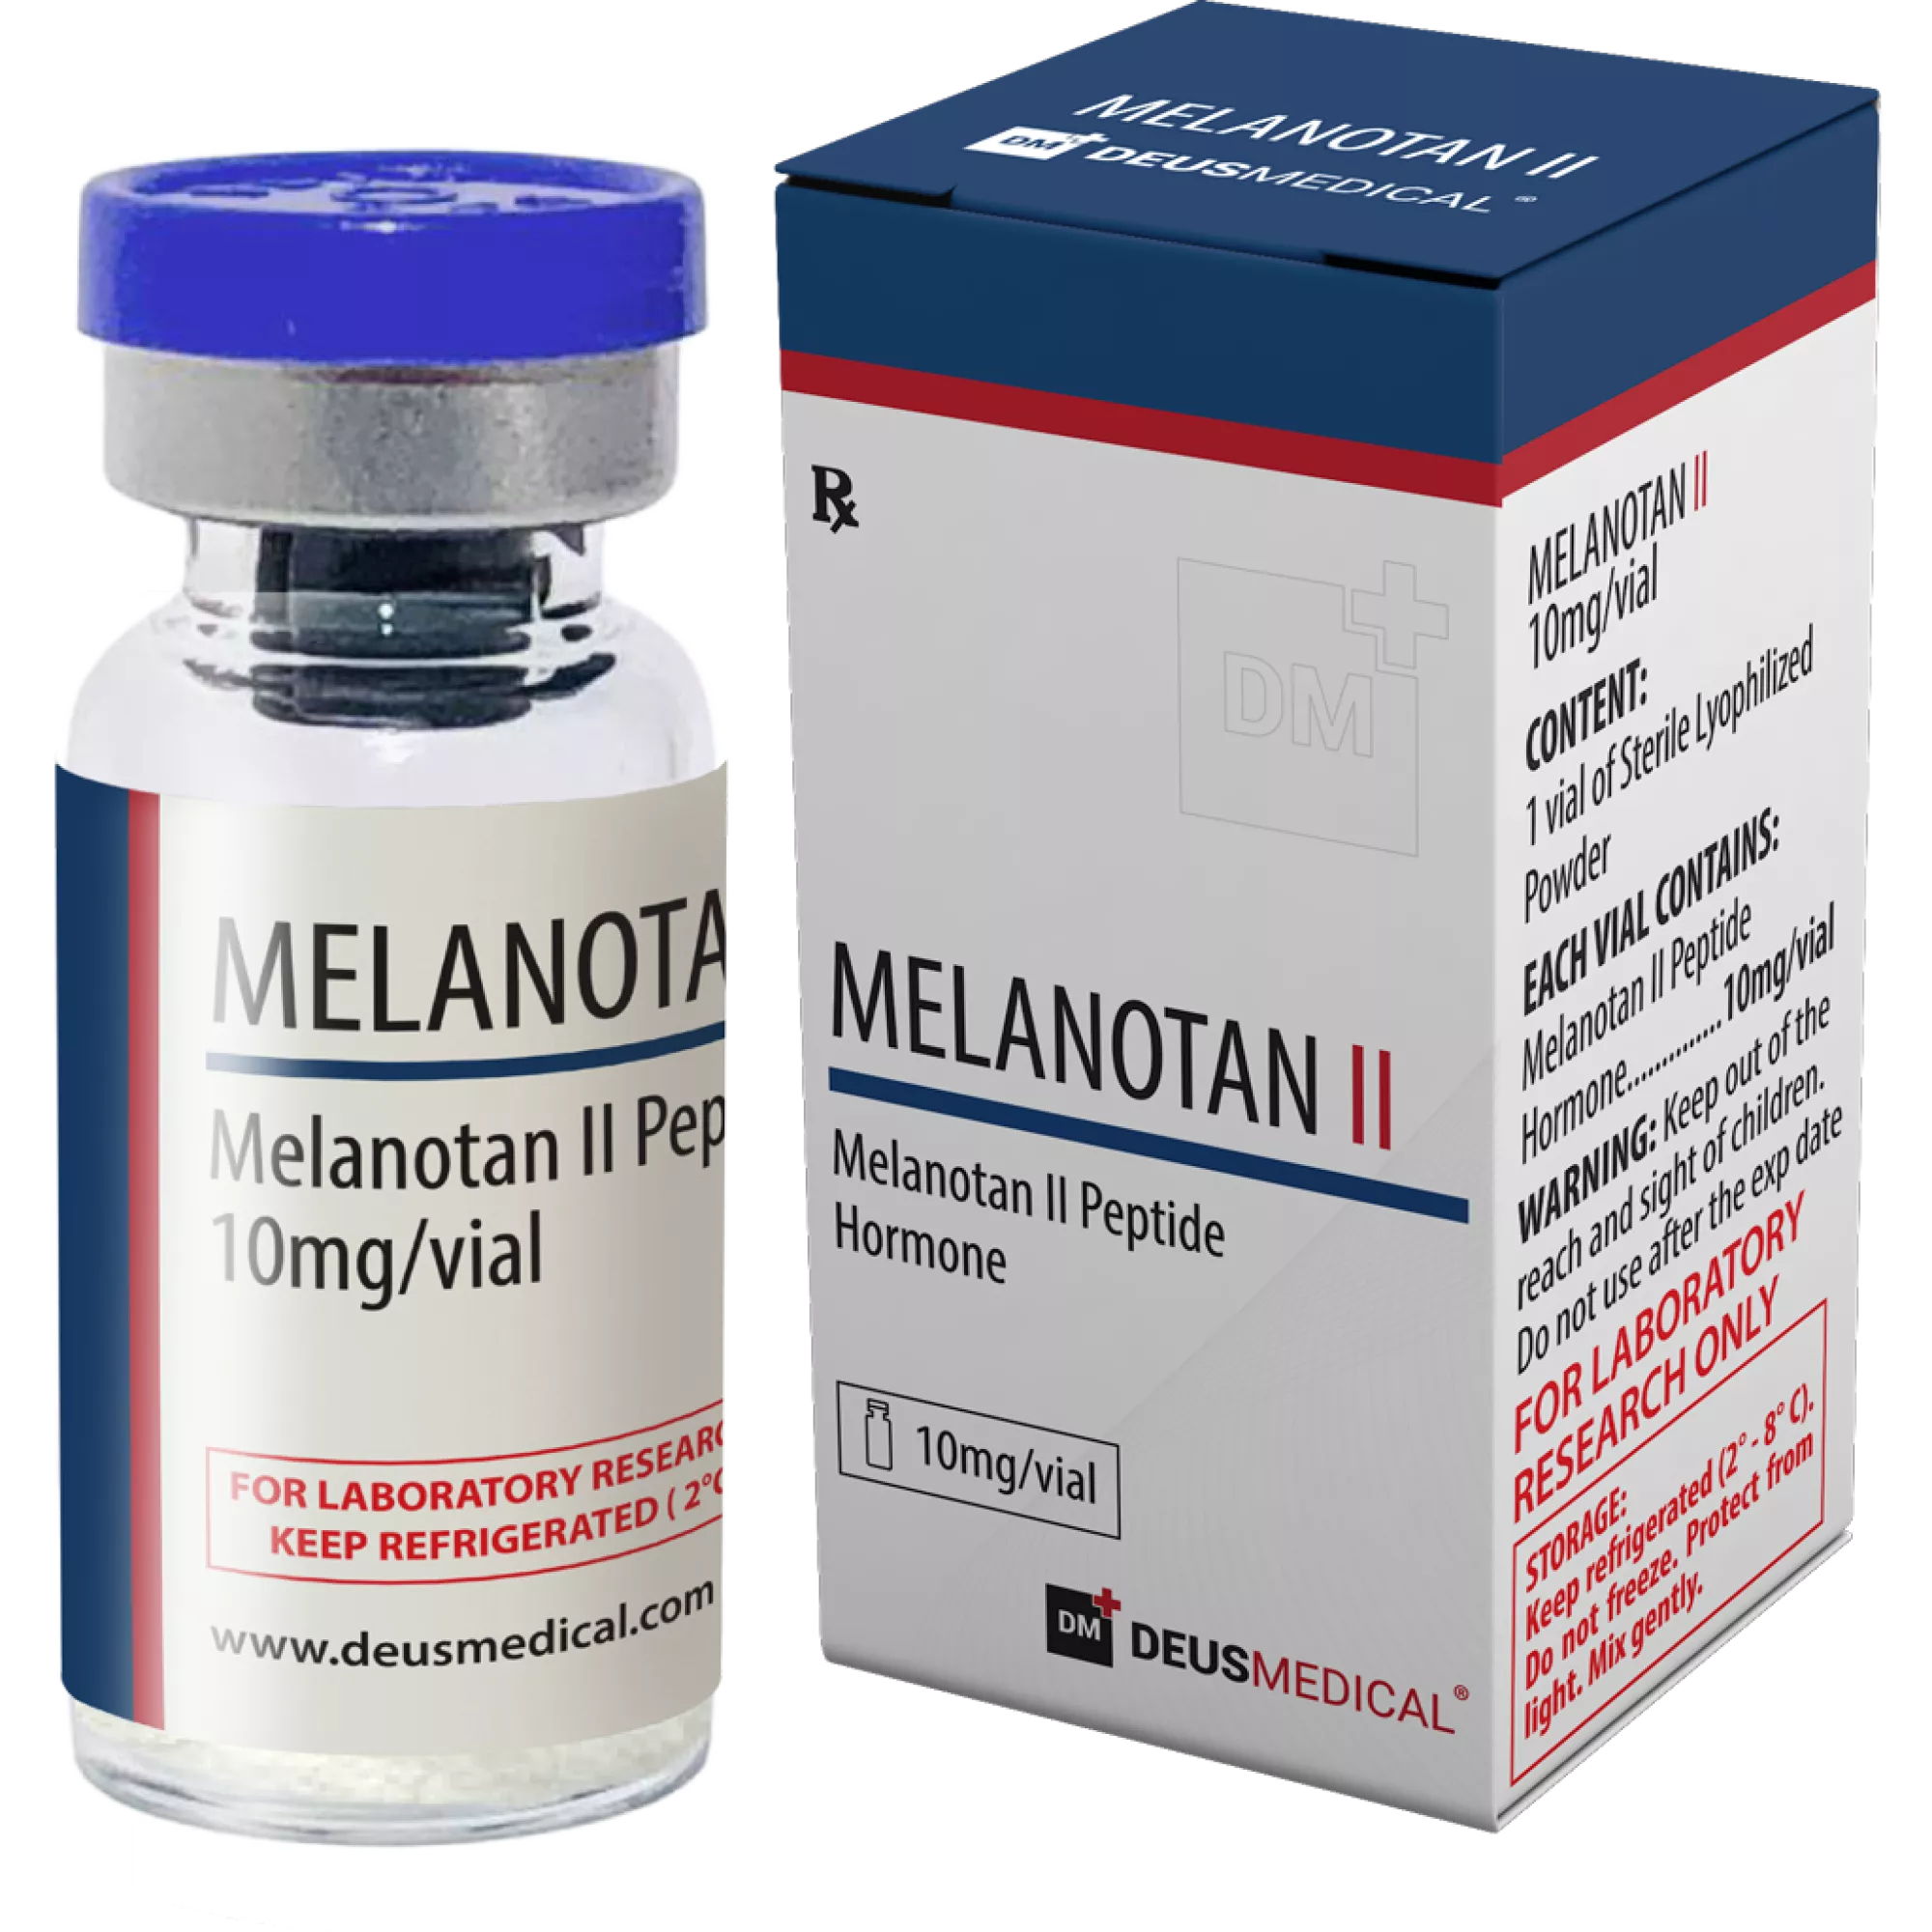 MELANOTAN II (Melanotan II Peptide Hormone), Deus Medical, Buy Steroids Online - www.deuspower.shop